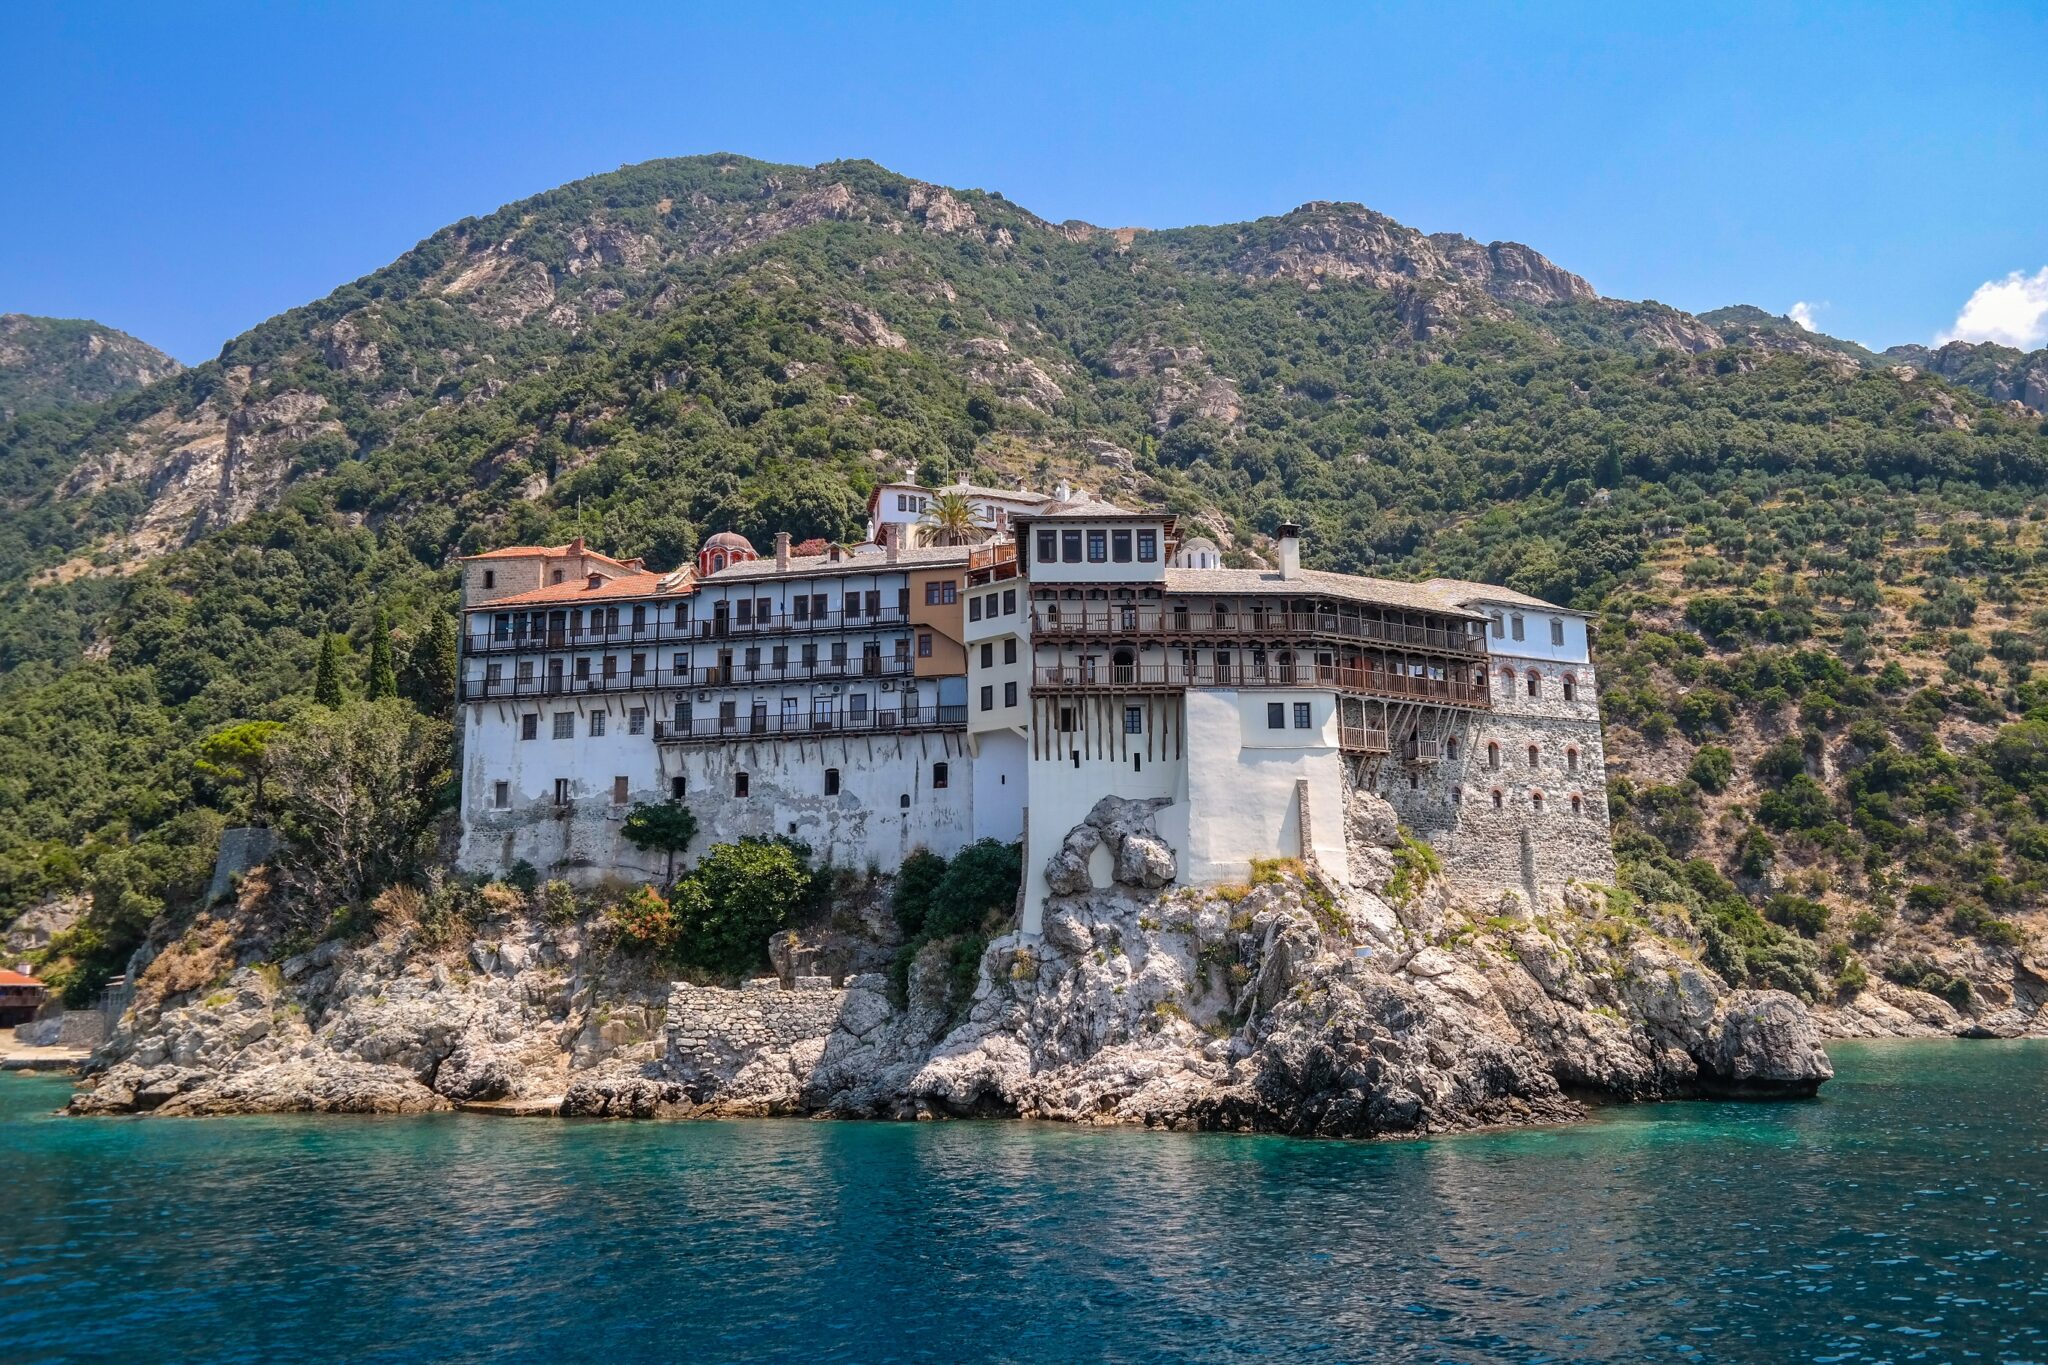  Explore Halkidiki - Classic Mount Athos cruise (8 monasteries) departing from Ormos Panagias